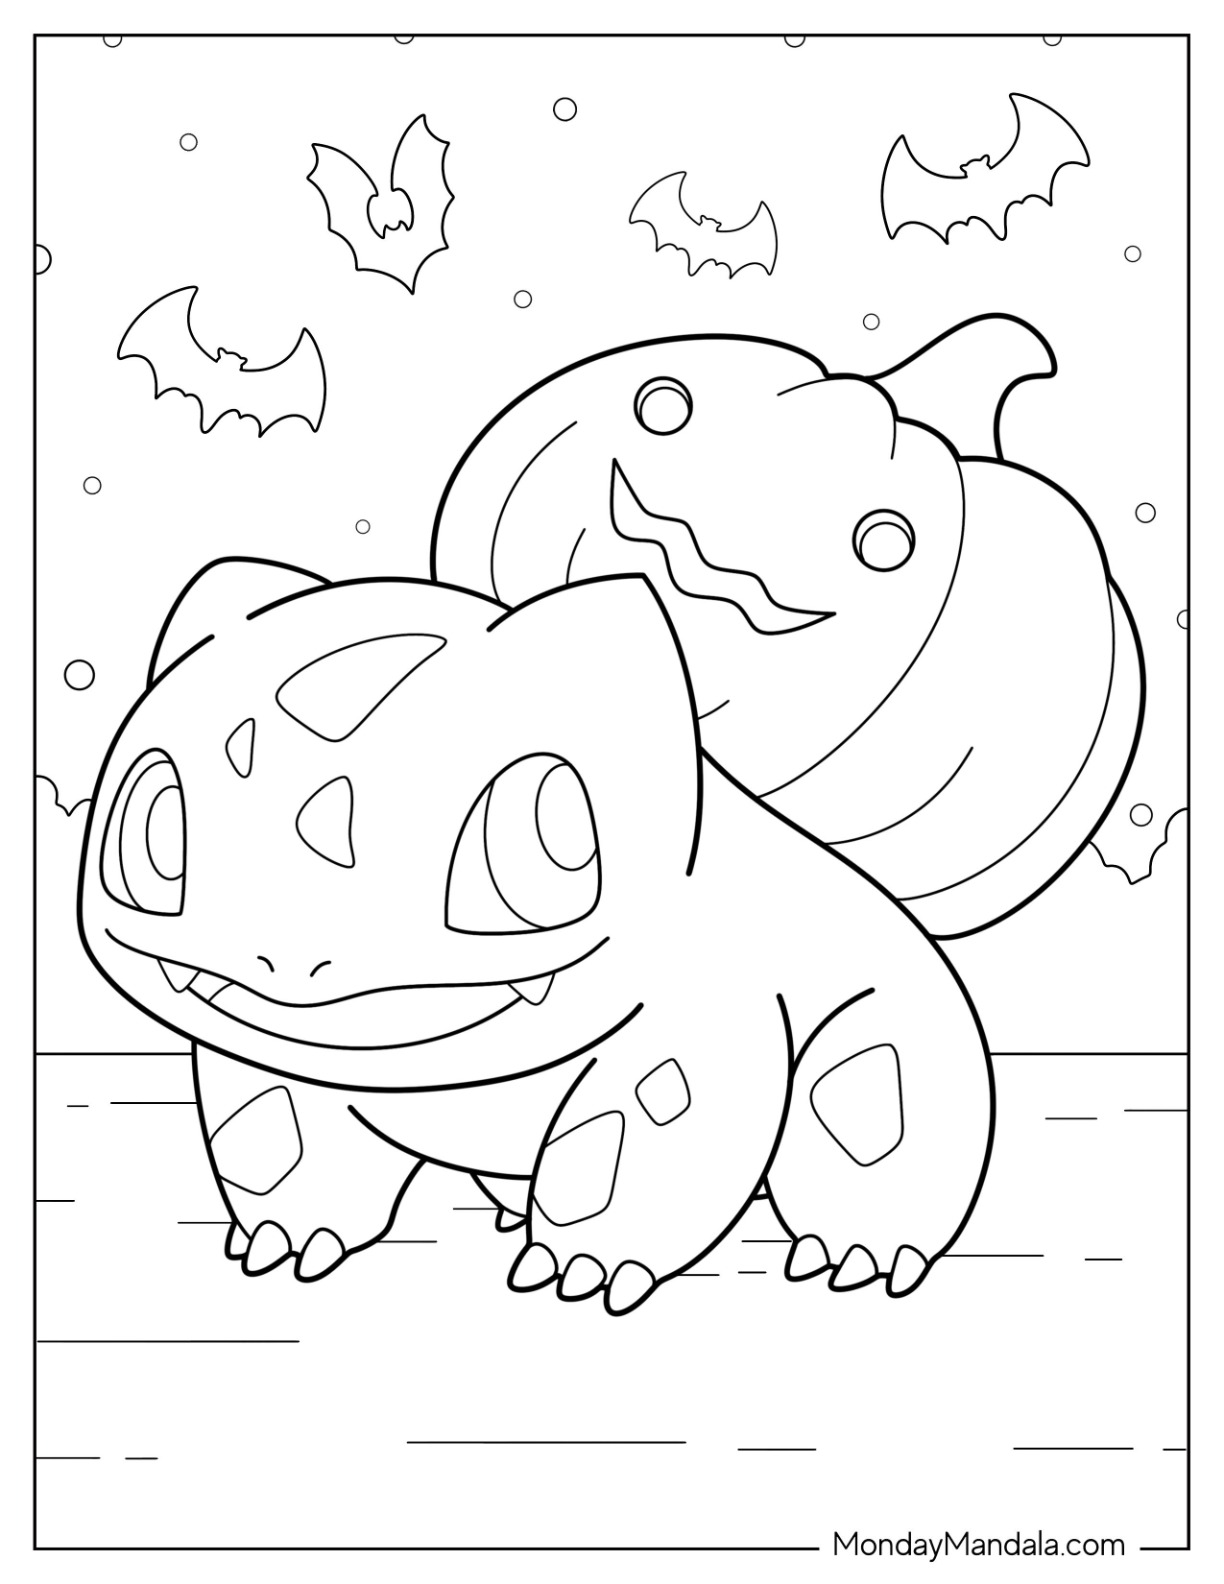 Bulbasaur coloring pages free pdf printables